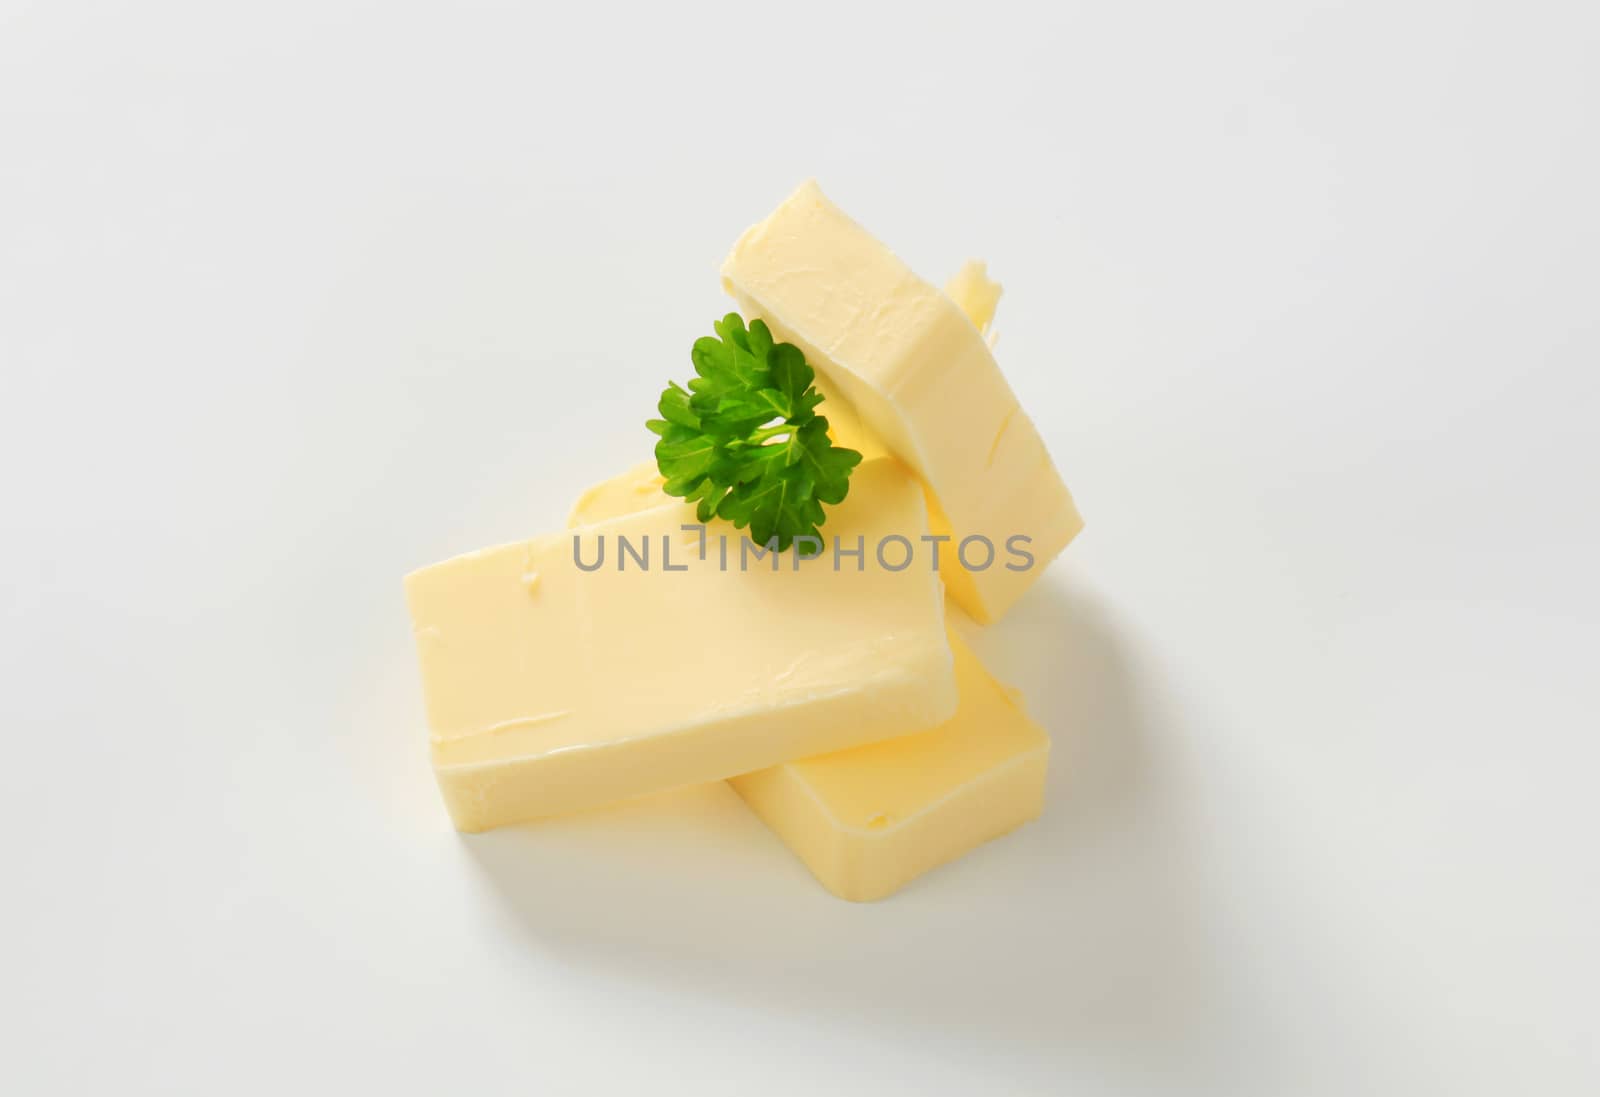 Pieces of fresh butter  - studio shot